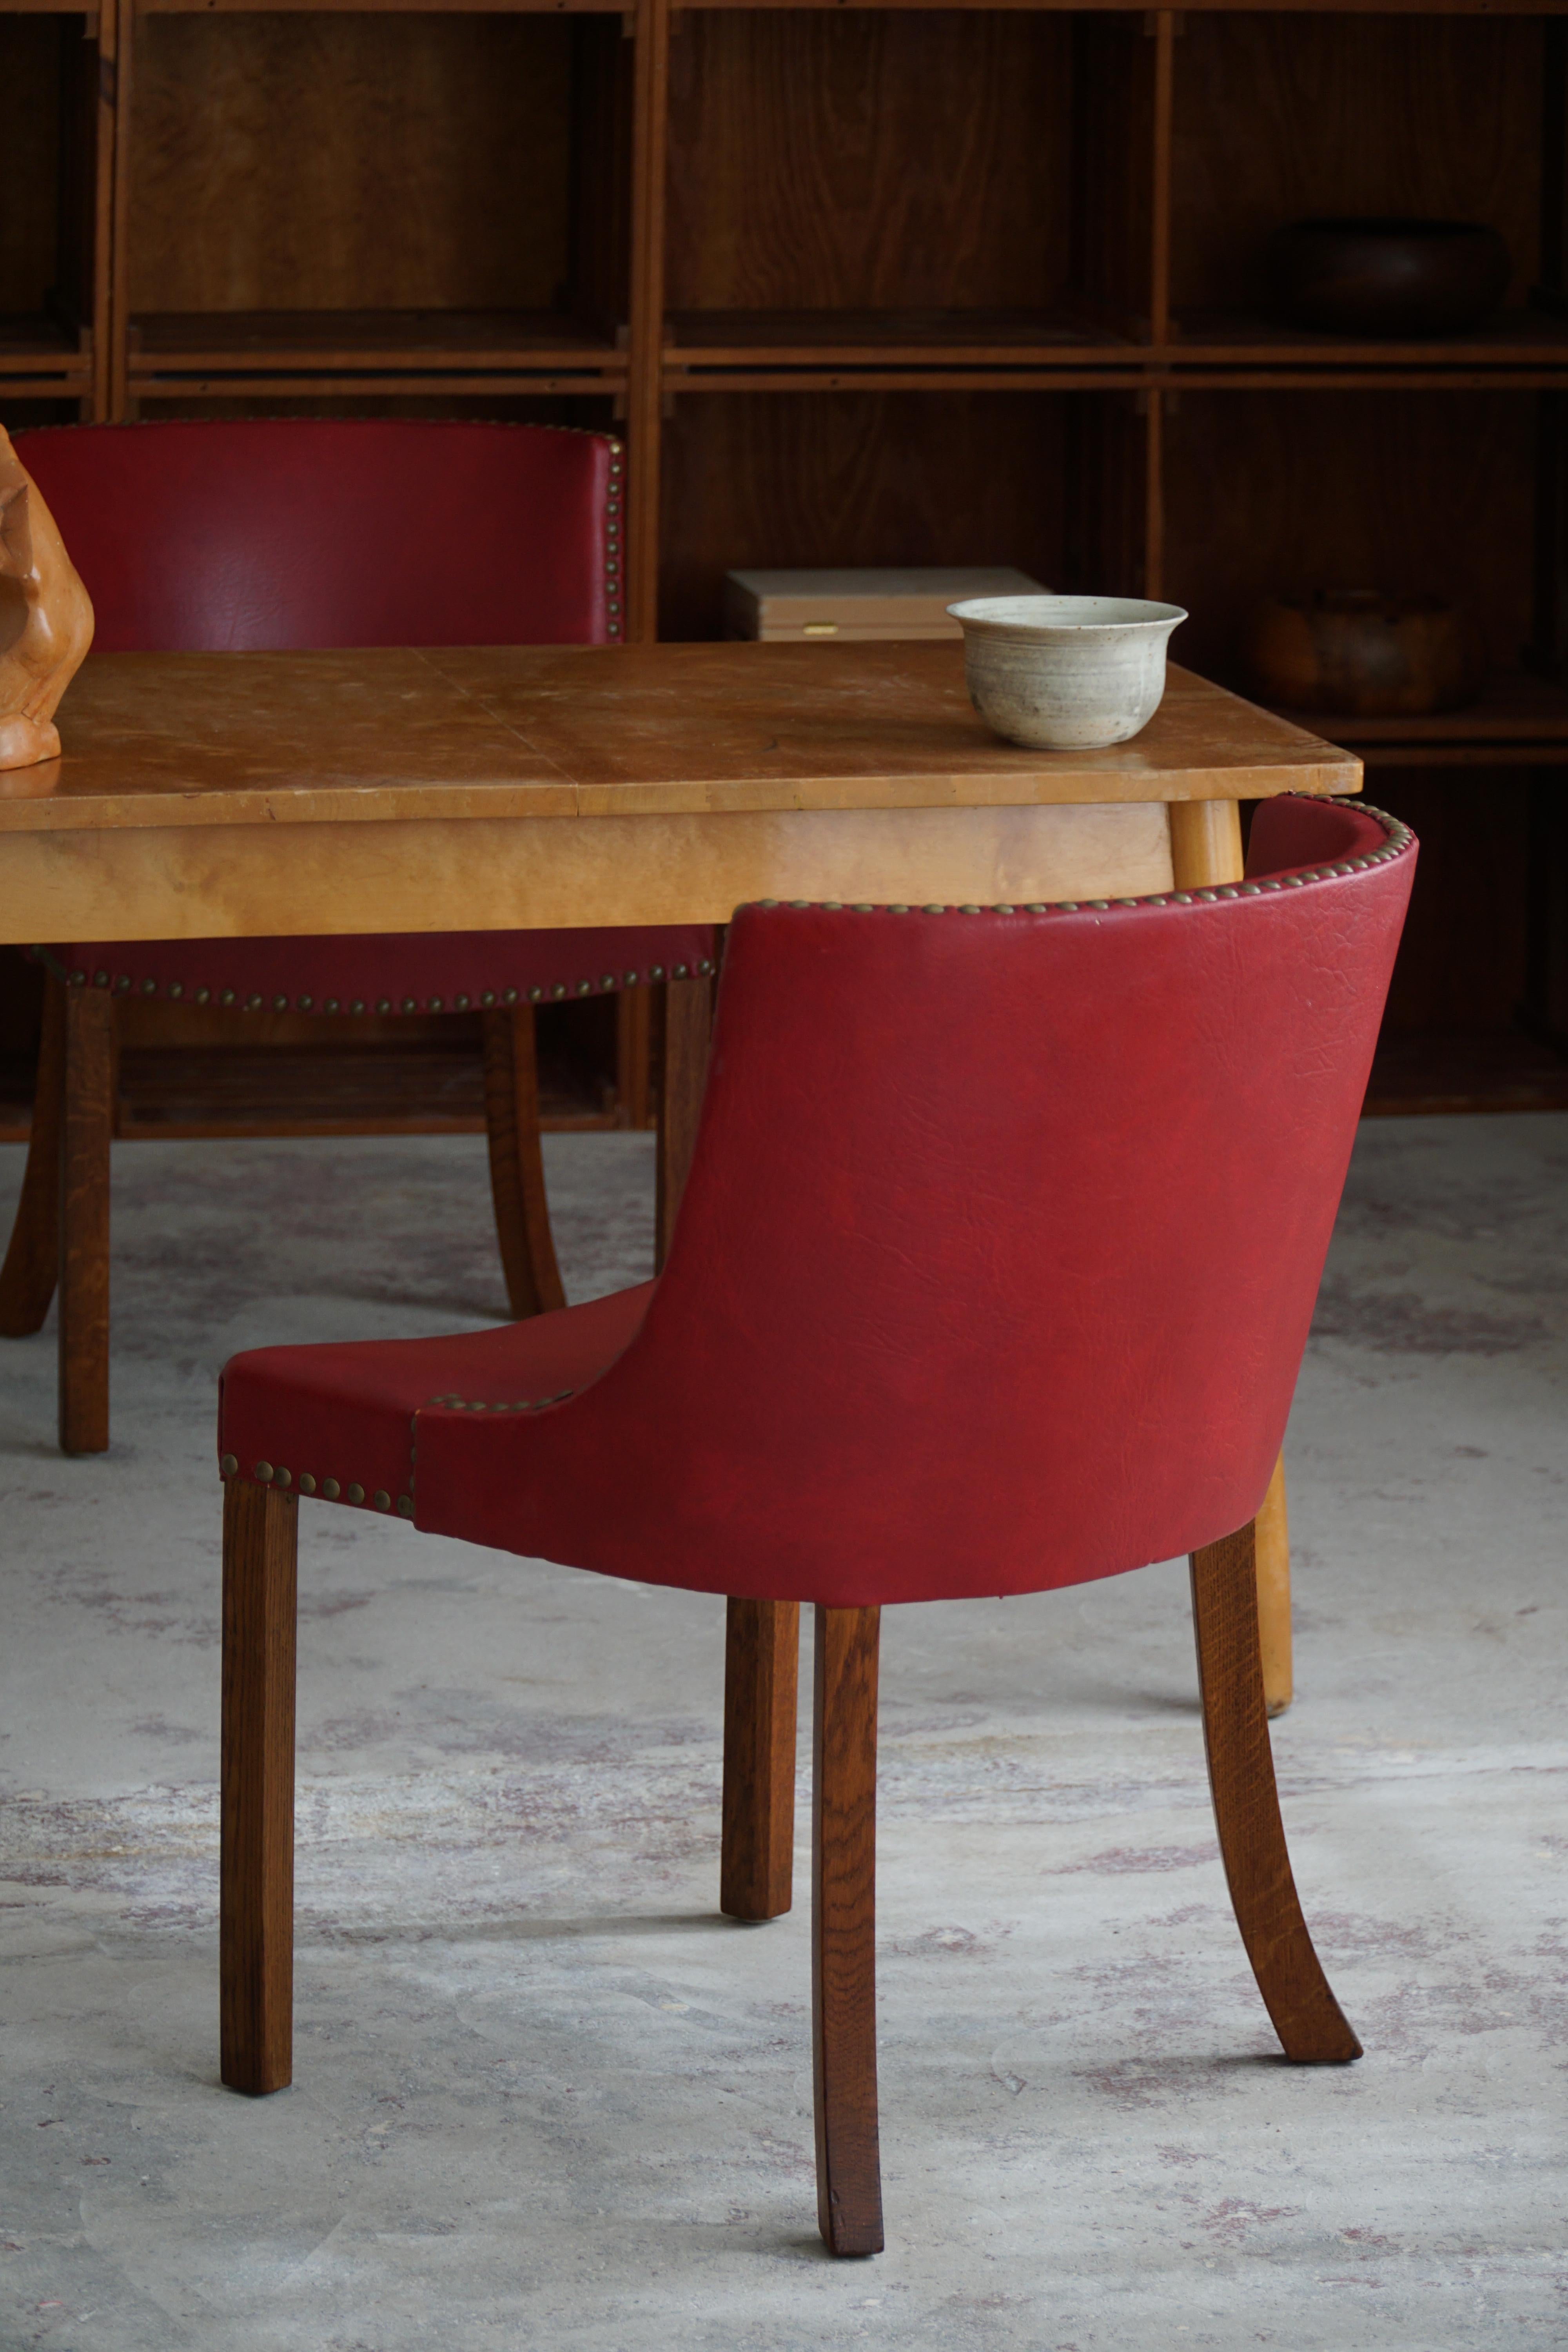 20th Century A Pair of Classic Chairs in Oak and Leather, Danish Modern, Kaj Gottlob, 1950s